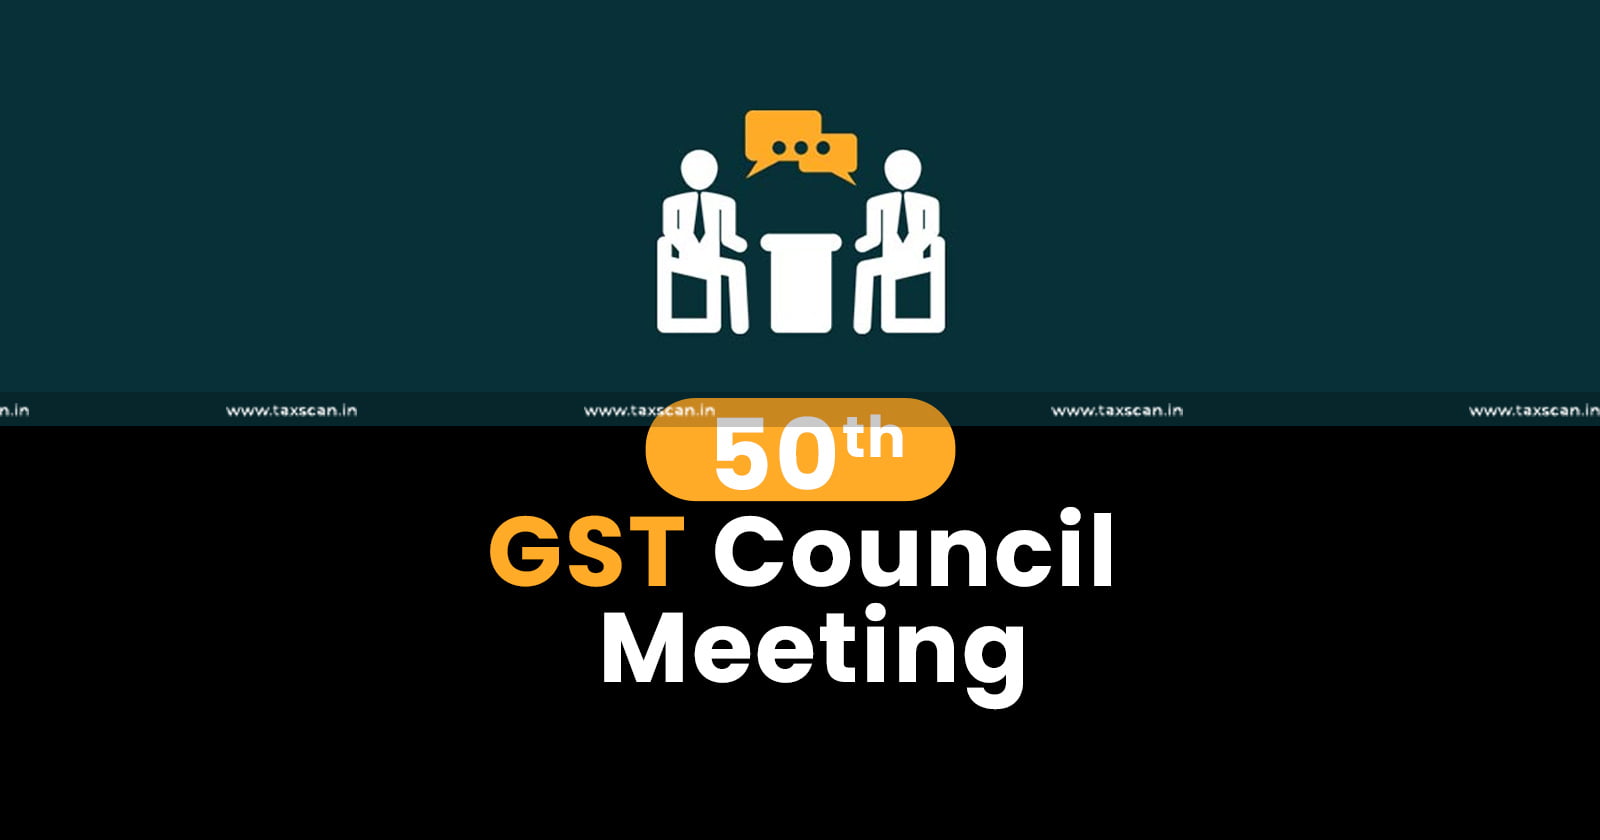 GSTAT - Satellite Launch Services - Agenda of 50th GST Council Meeting - Agenda - 50th GST Council Meeting - GST Council Meeting - GST Council - Council Meeting - GST - Taxscan